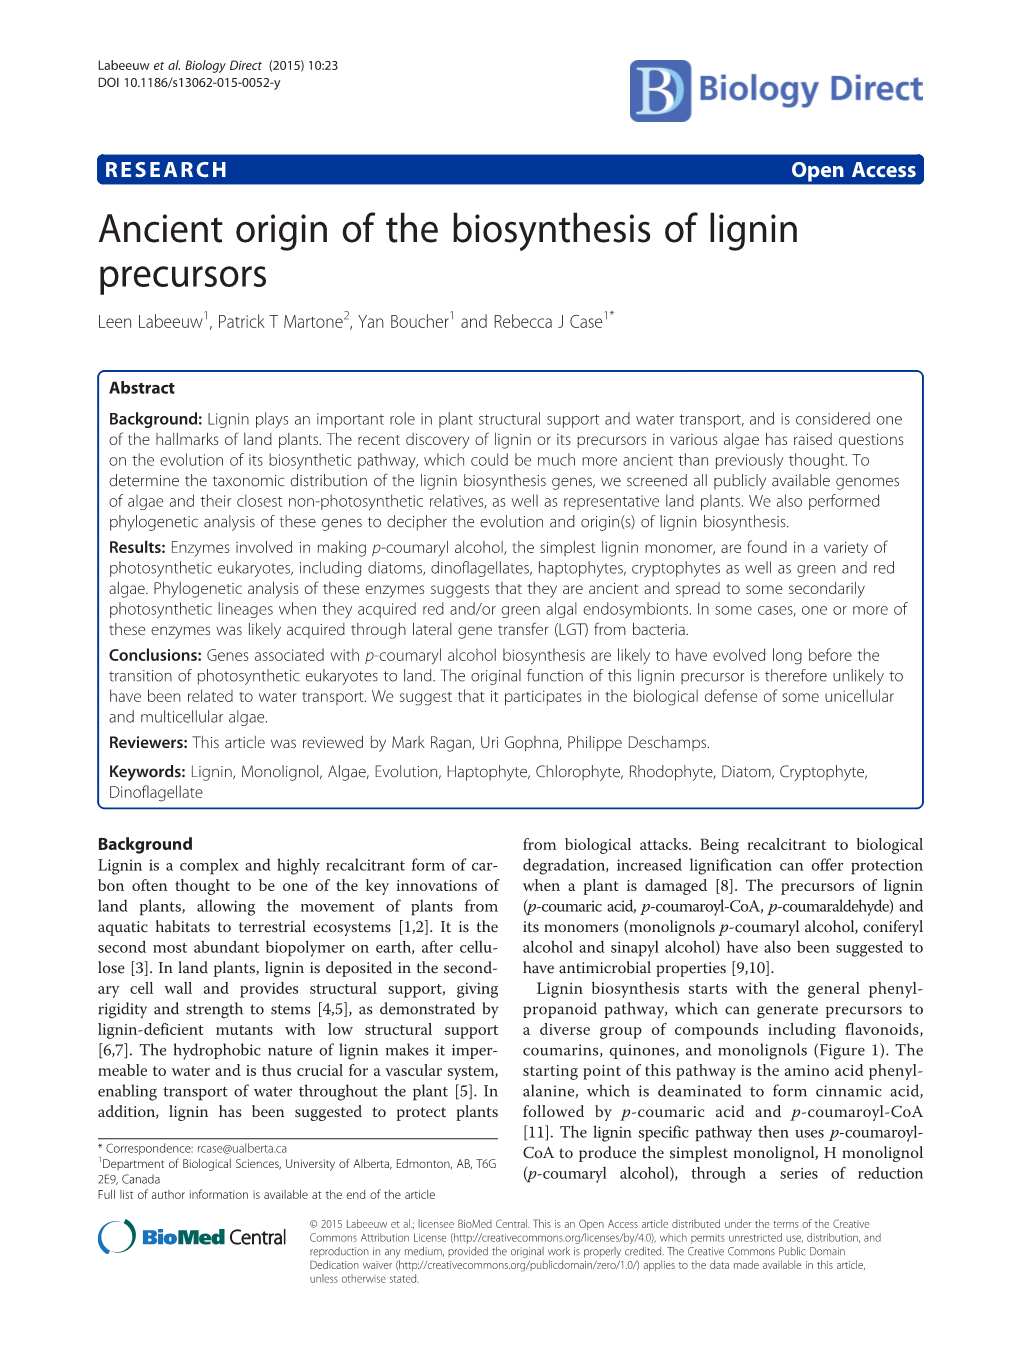 Ancient Origin of the Biosynthesis of Lignin Precursors Leen Labeeuw1, Patrick T Martone2, Yan Boucher1 and Rebecca J Case1*